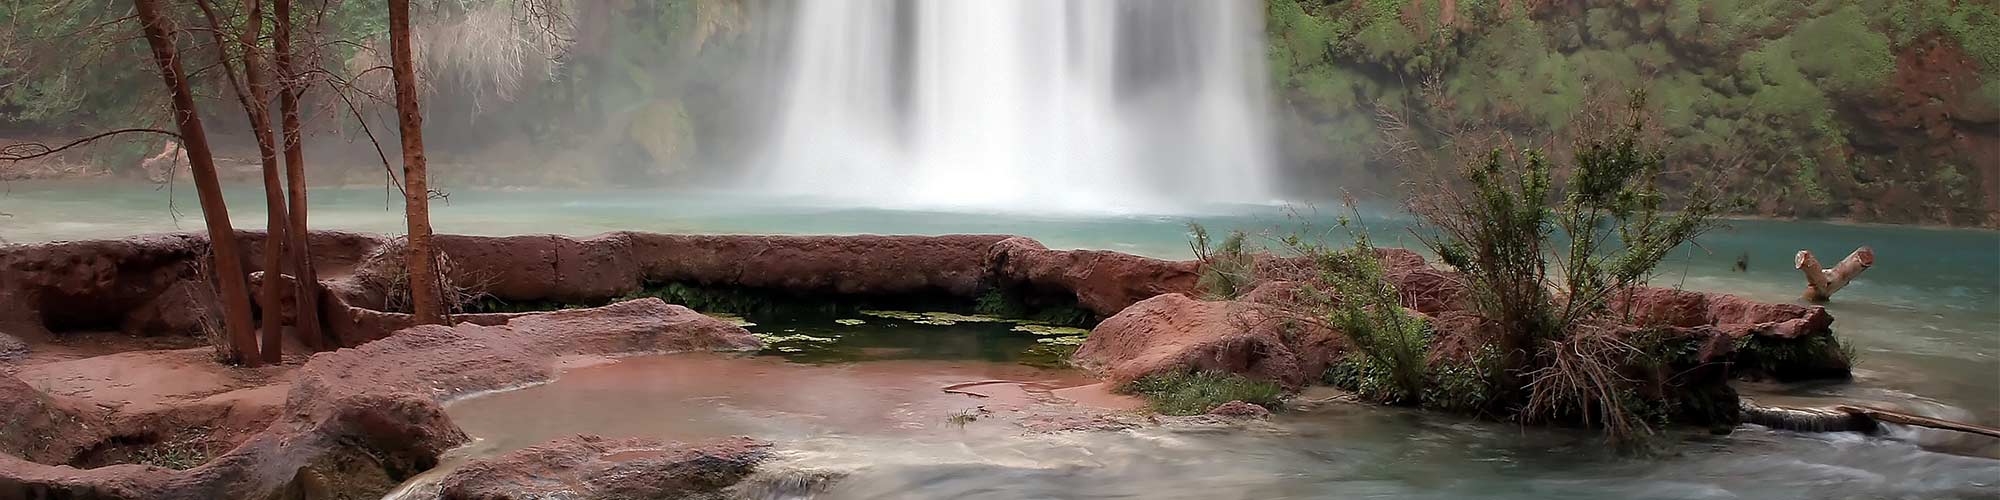 Photo of waterfall behind red rock landscape in Havasupai Gardens, Arizona